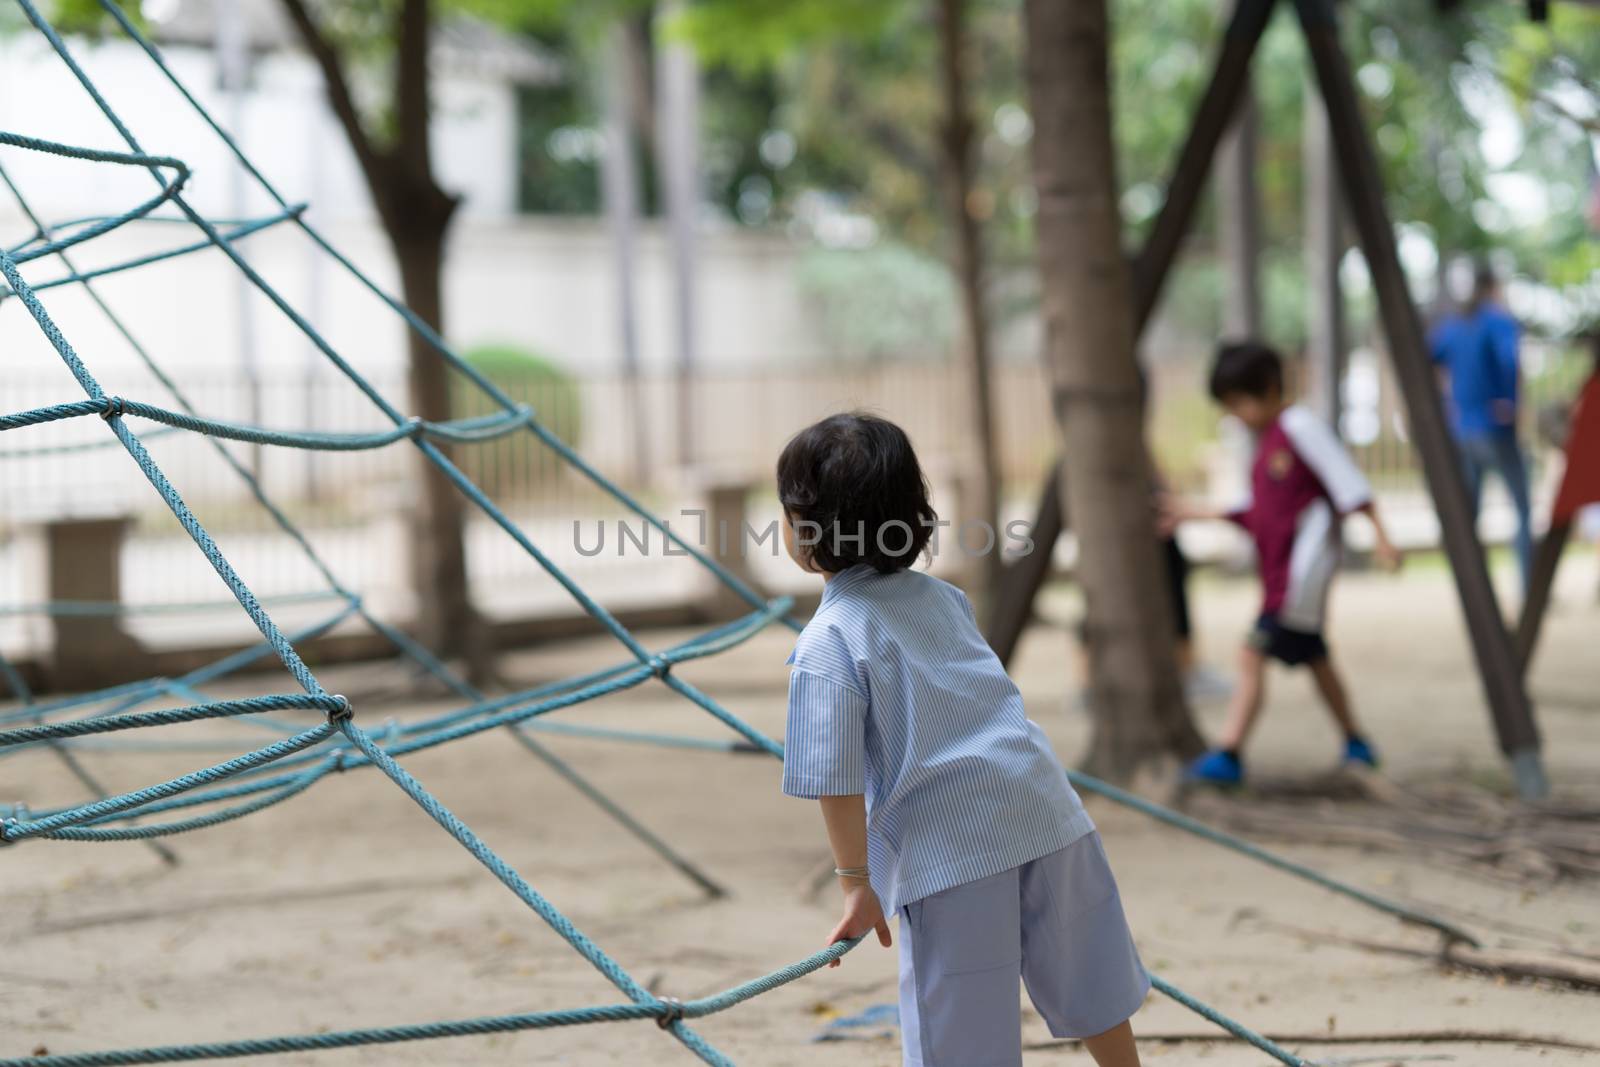 bioy kid in uniform play ropr climb in playground